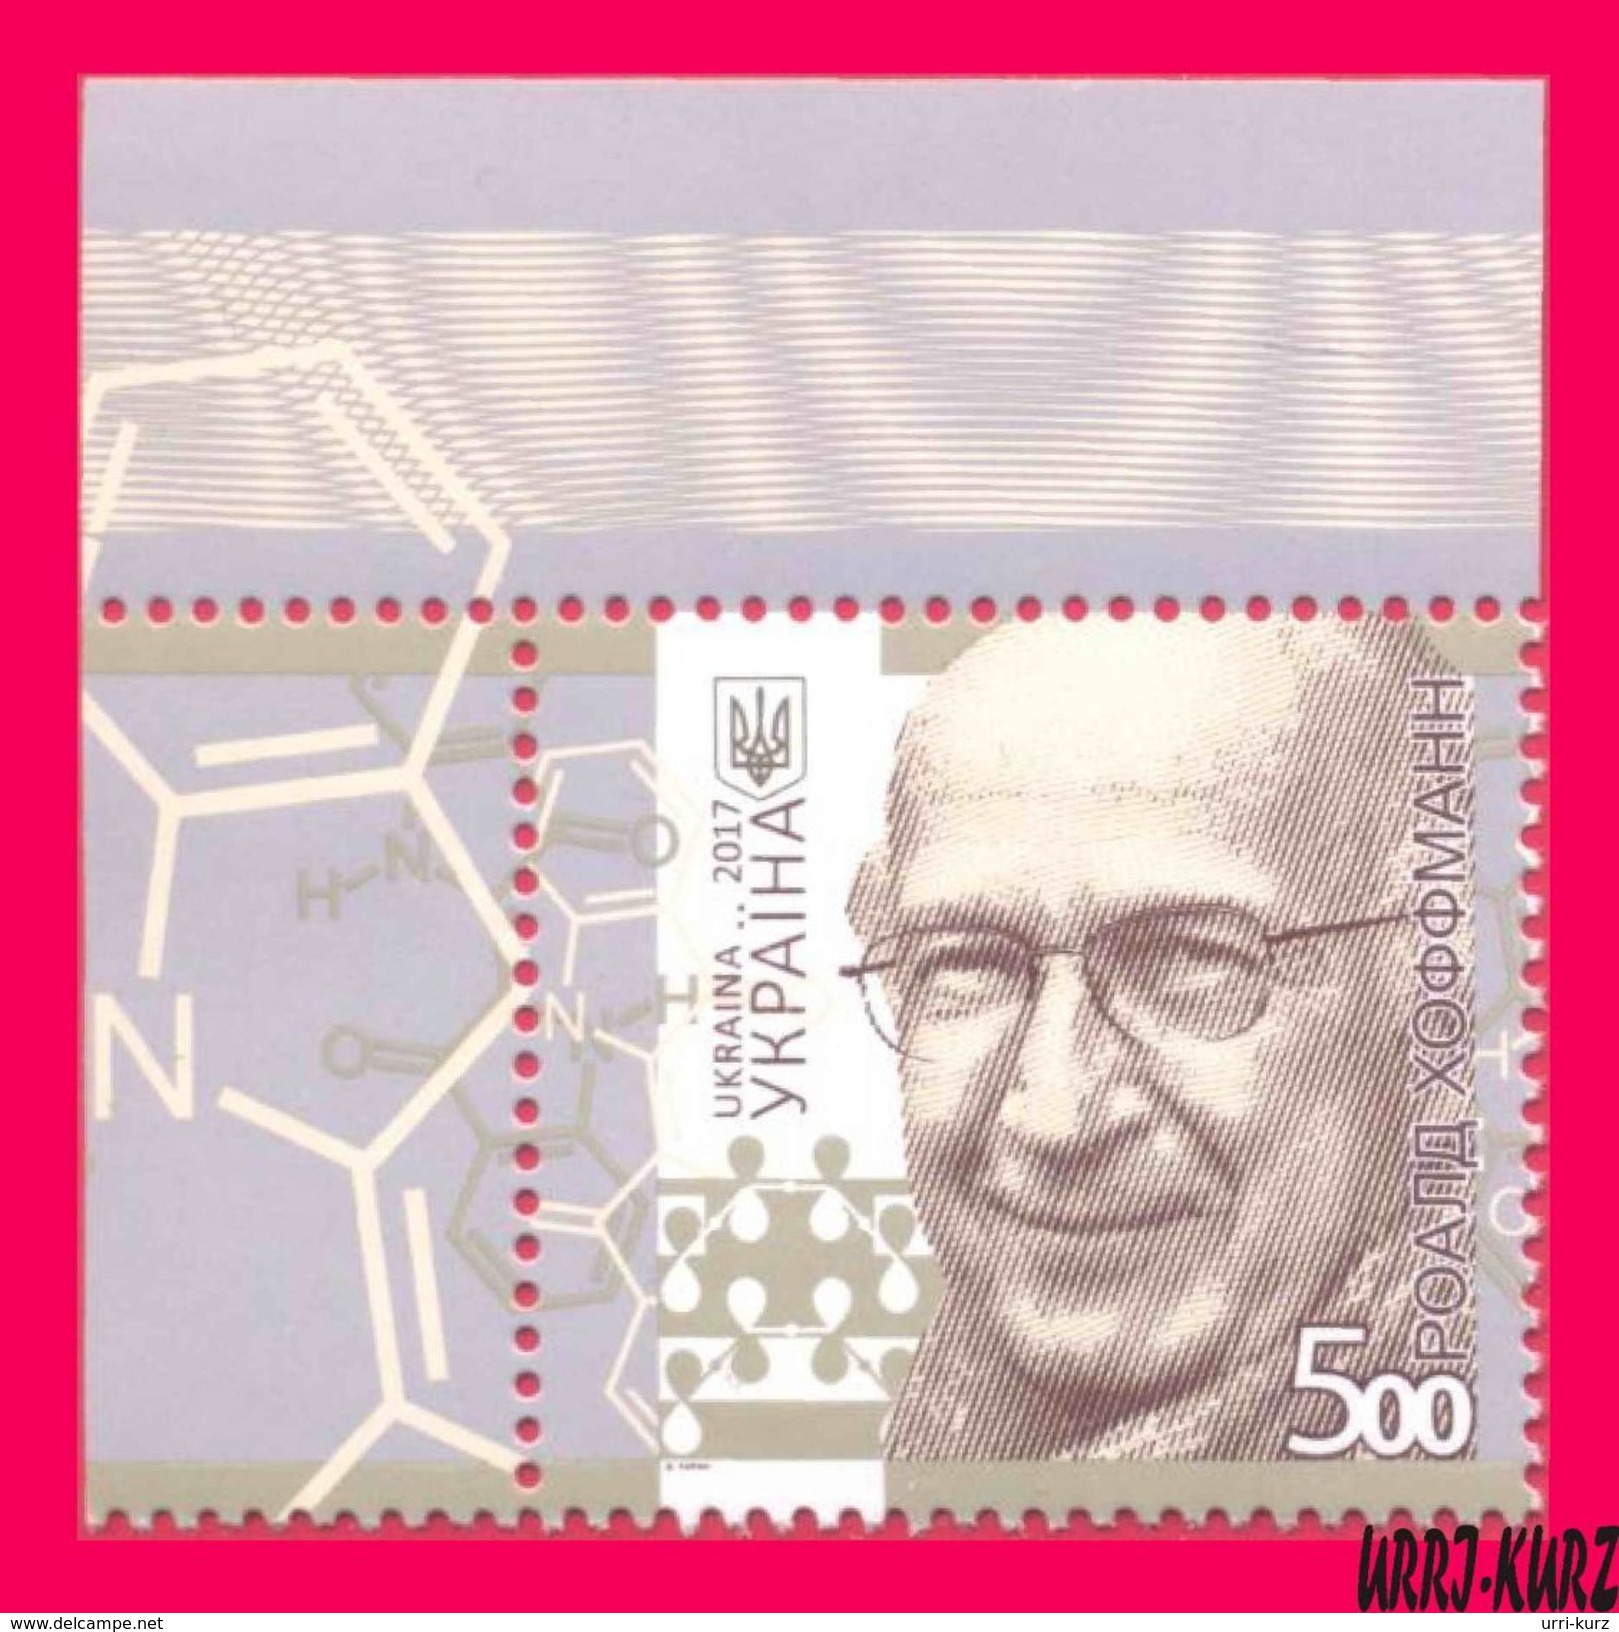 UKRAINE 2017 Famous People Scientist Chemist Nobel Prize Laureate Roald Hoffmann 1v Mi1625 MNH - Chemie